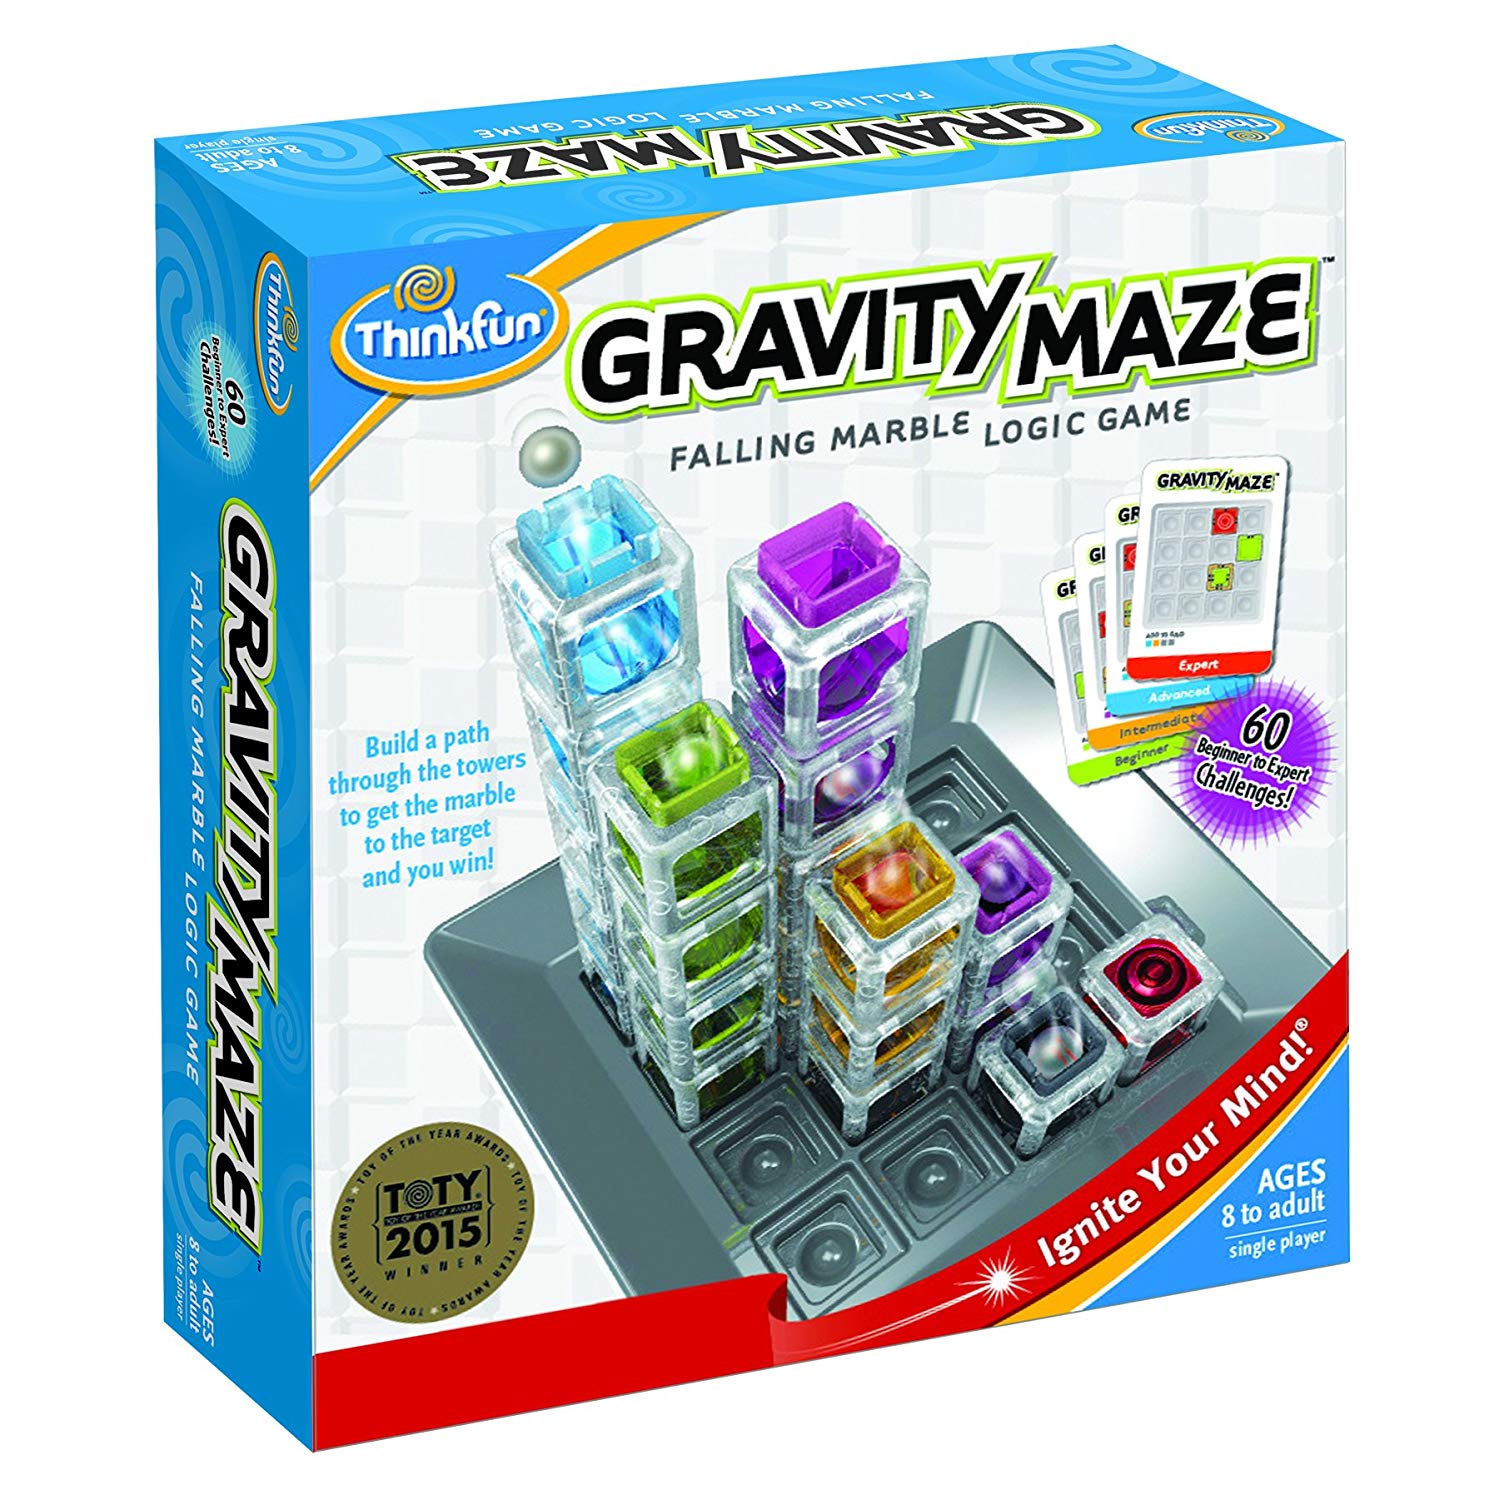 ThinkFun Gravity Maze Marble Run Logic Game For Kids $19.99